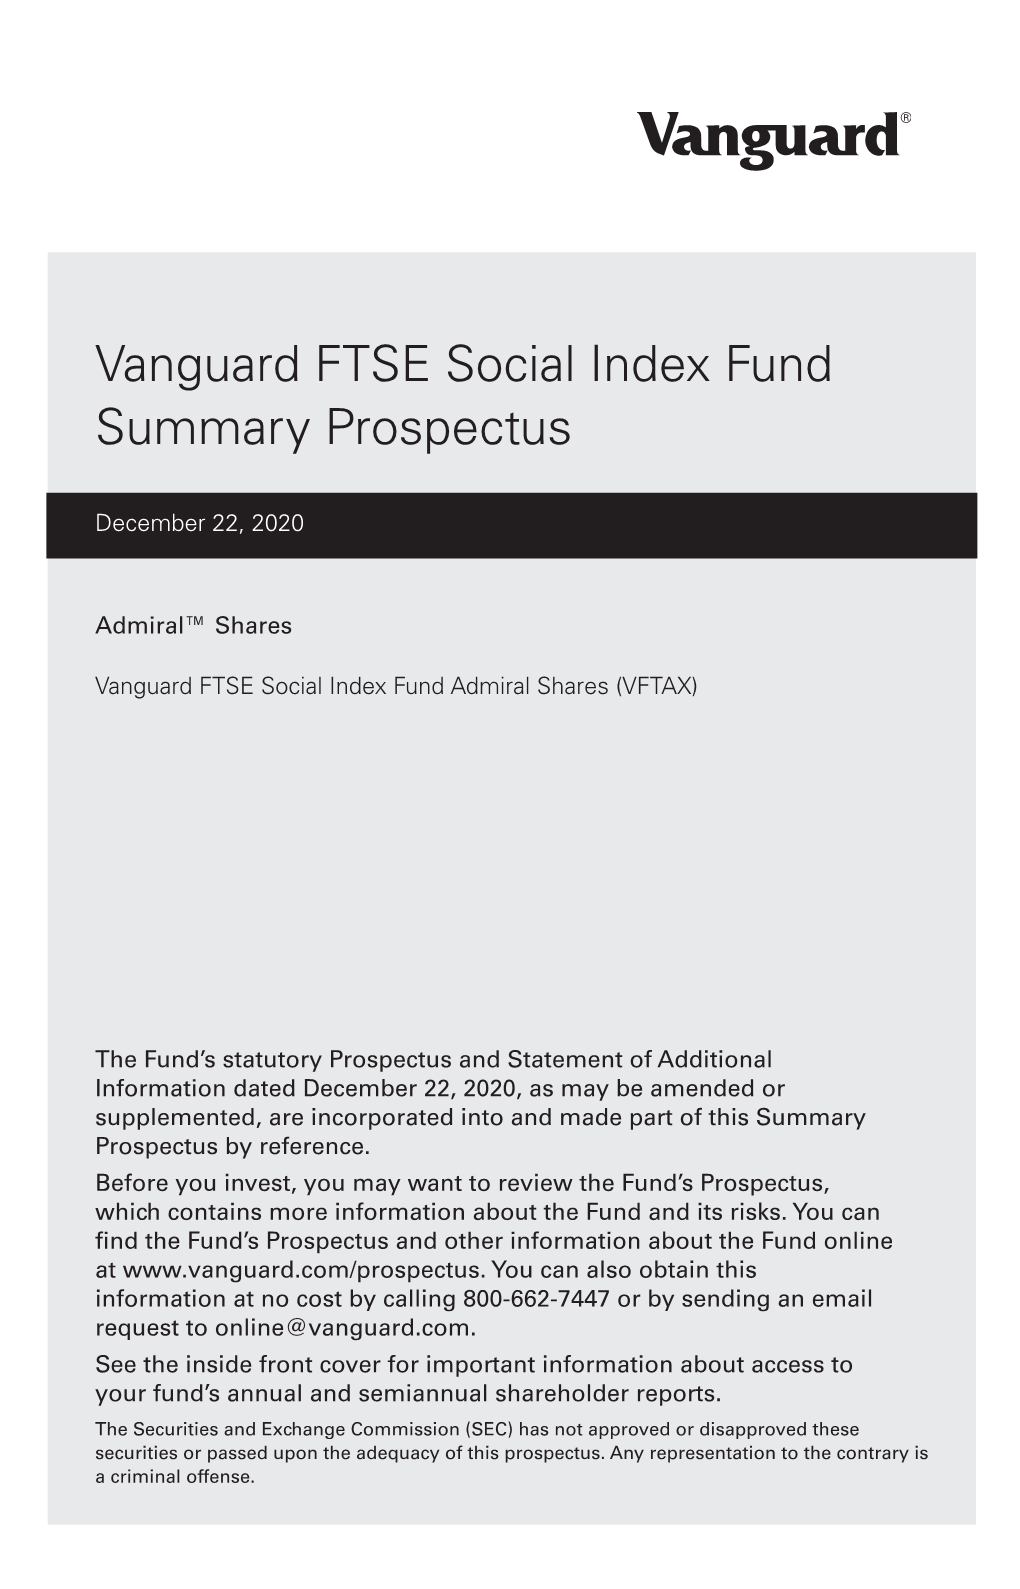 Vanguard FTSE Social Index Fund Summary Prospectus